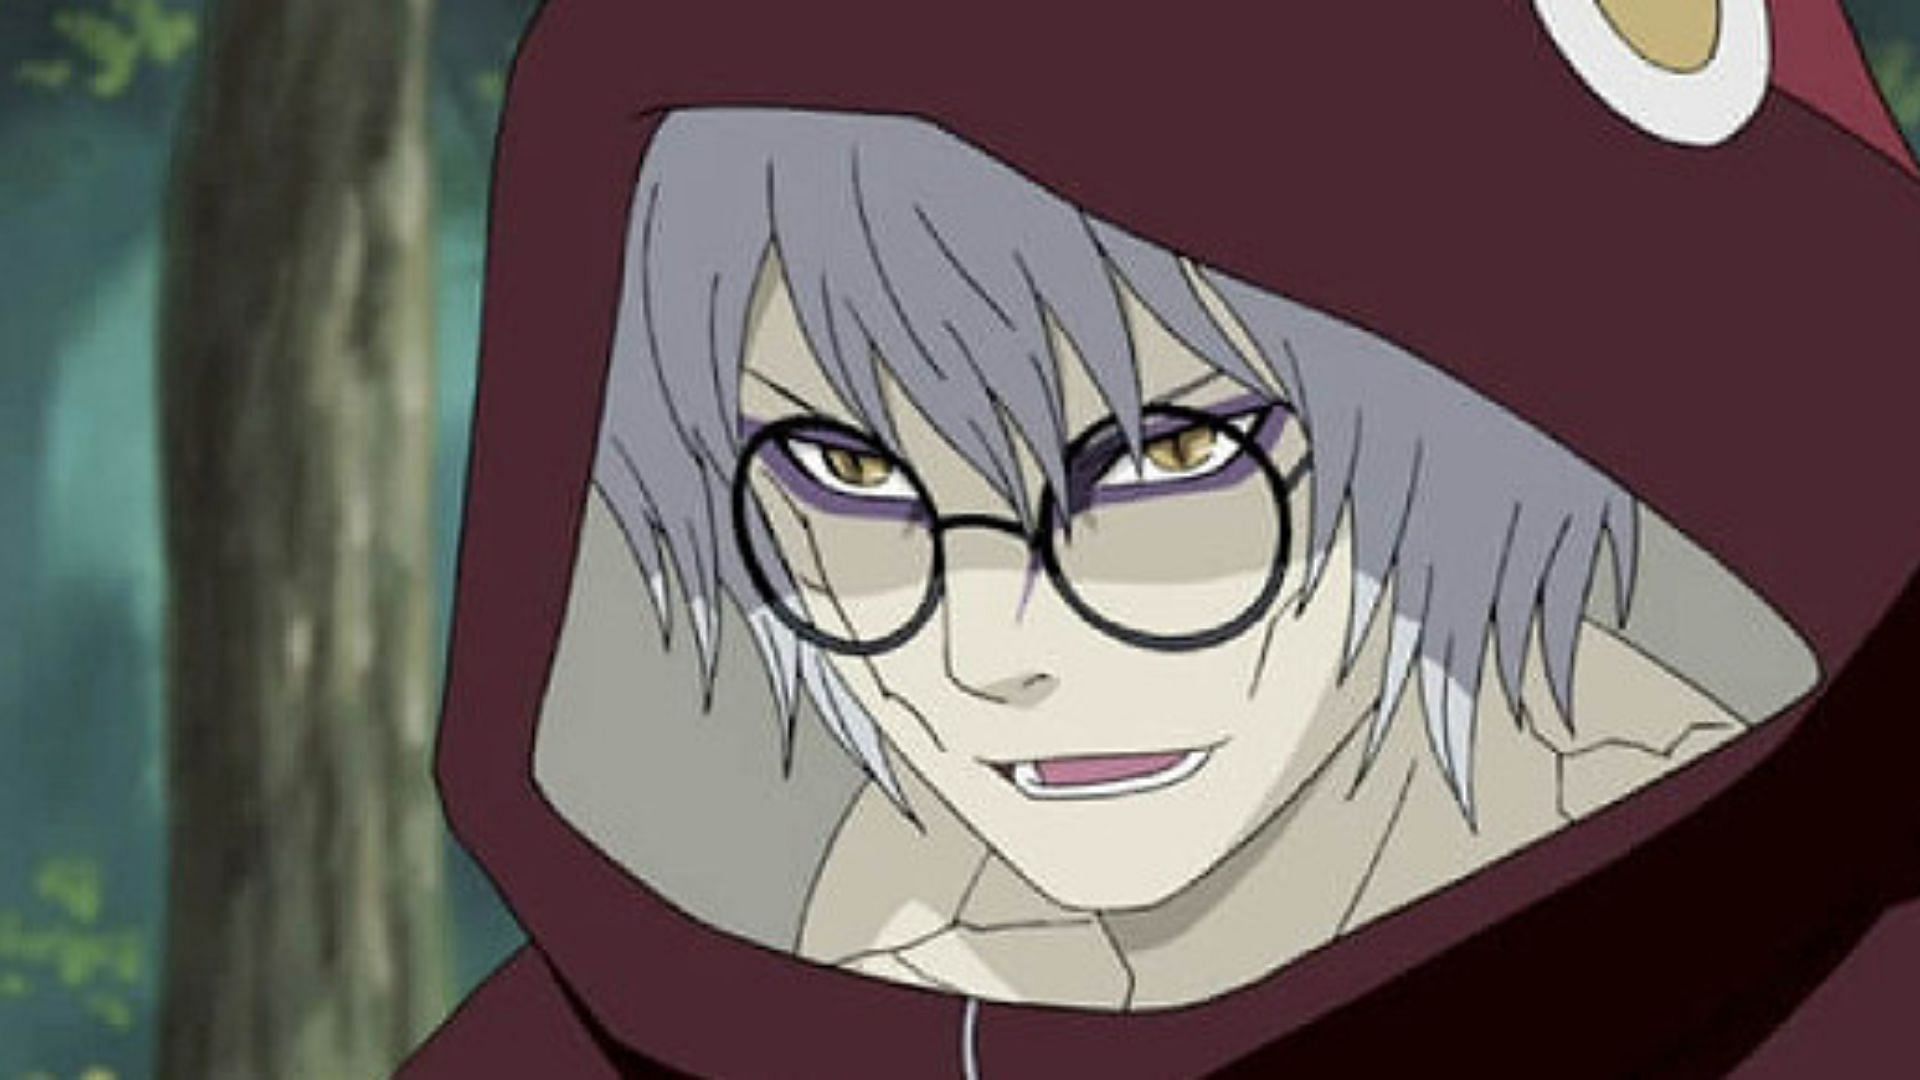 Kabuto Yakushi as shown in anime (Image via Studio Pierrot)